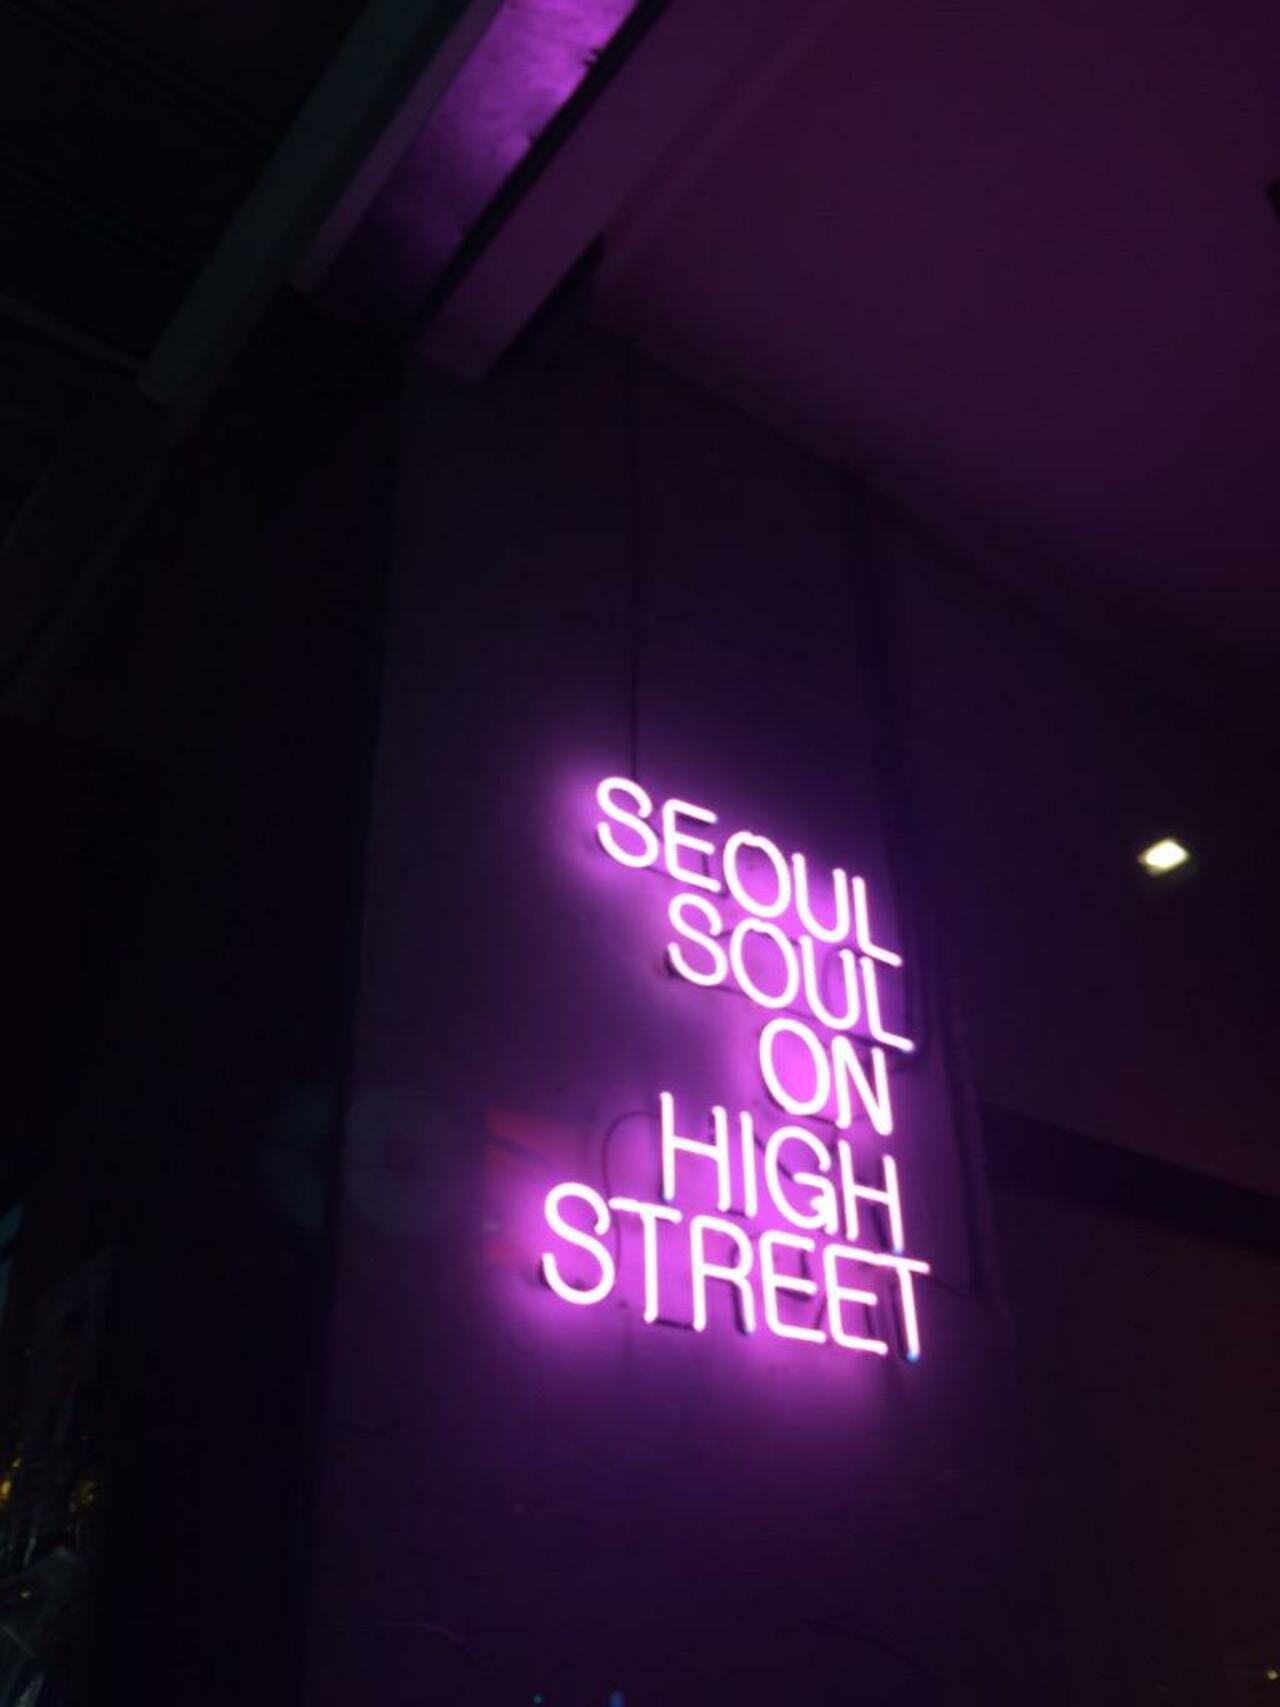 Seoul Soul on High Street is #prettyinpink #melbourne #northcote #neonsign #lightart http://t.co/GHmLpKM7AF